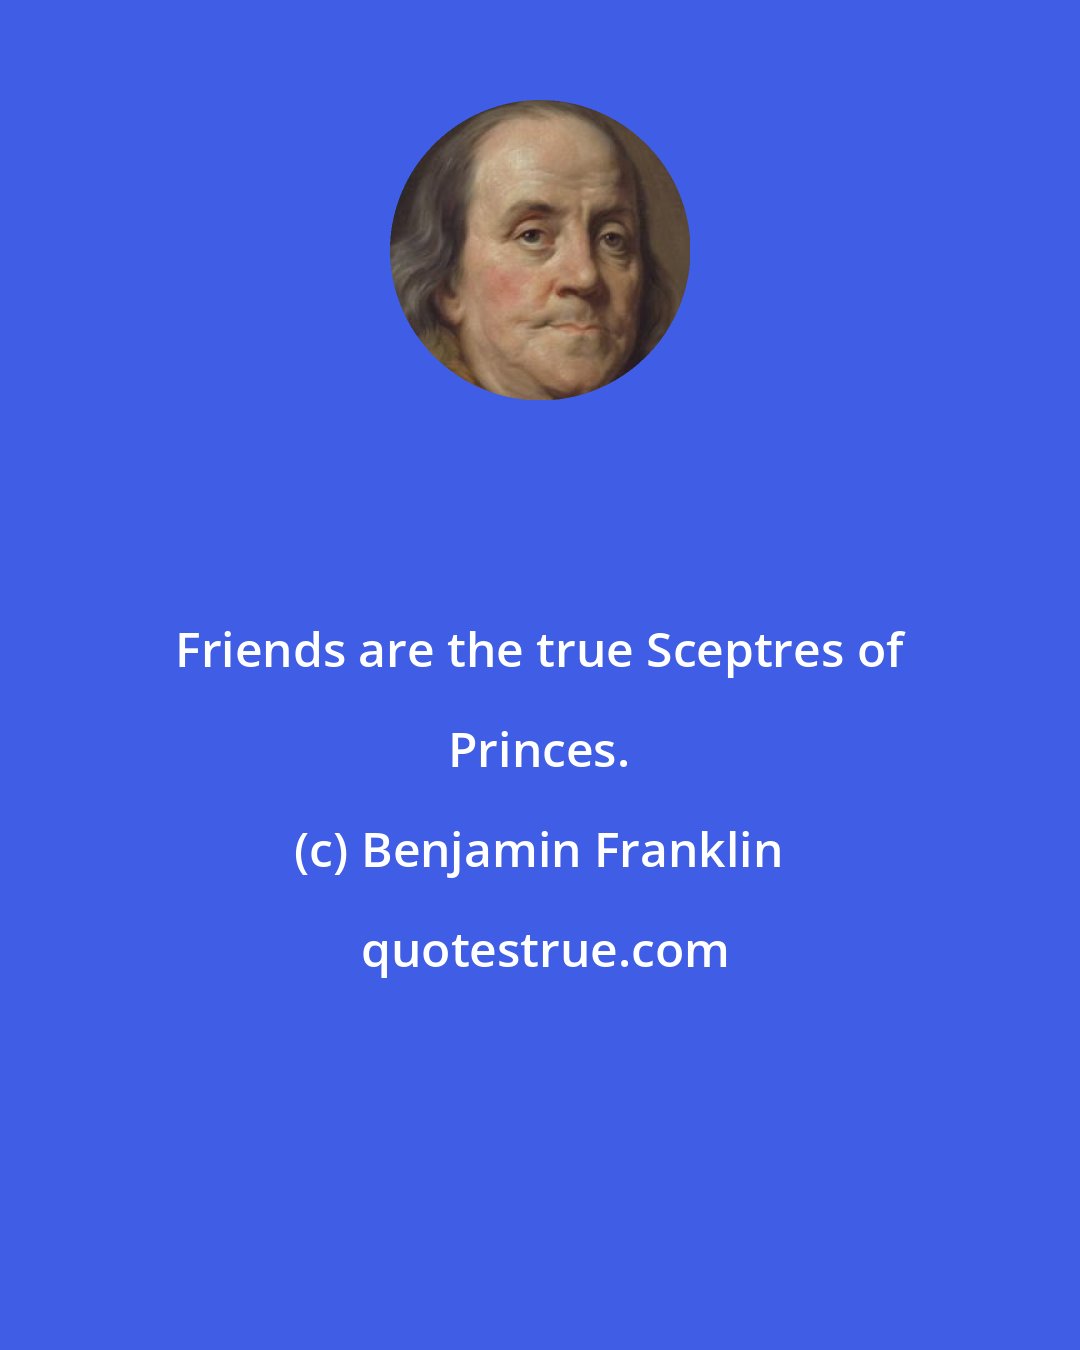 Benjamin Franklin: Friends are the true Sceptres of Princes.